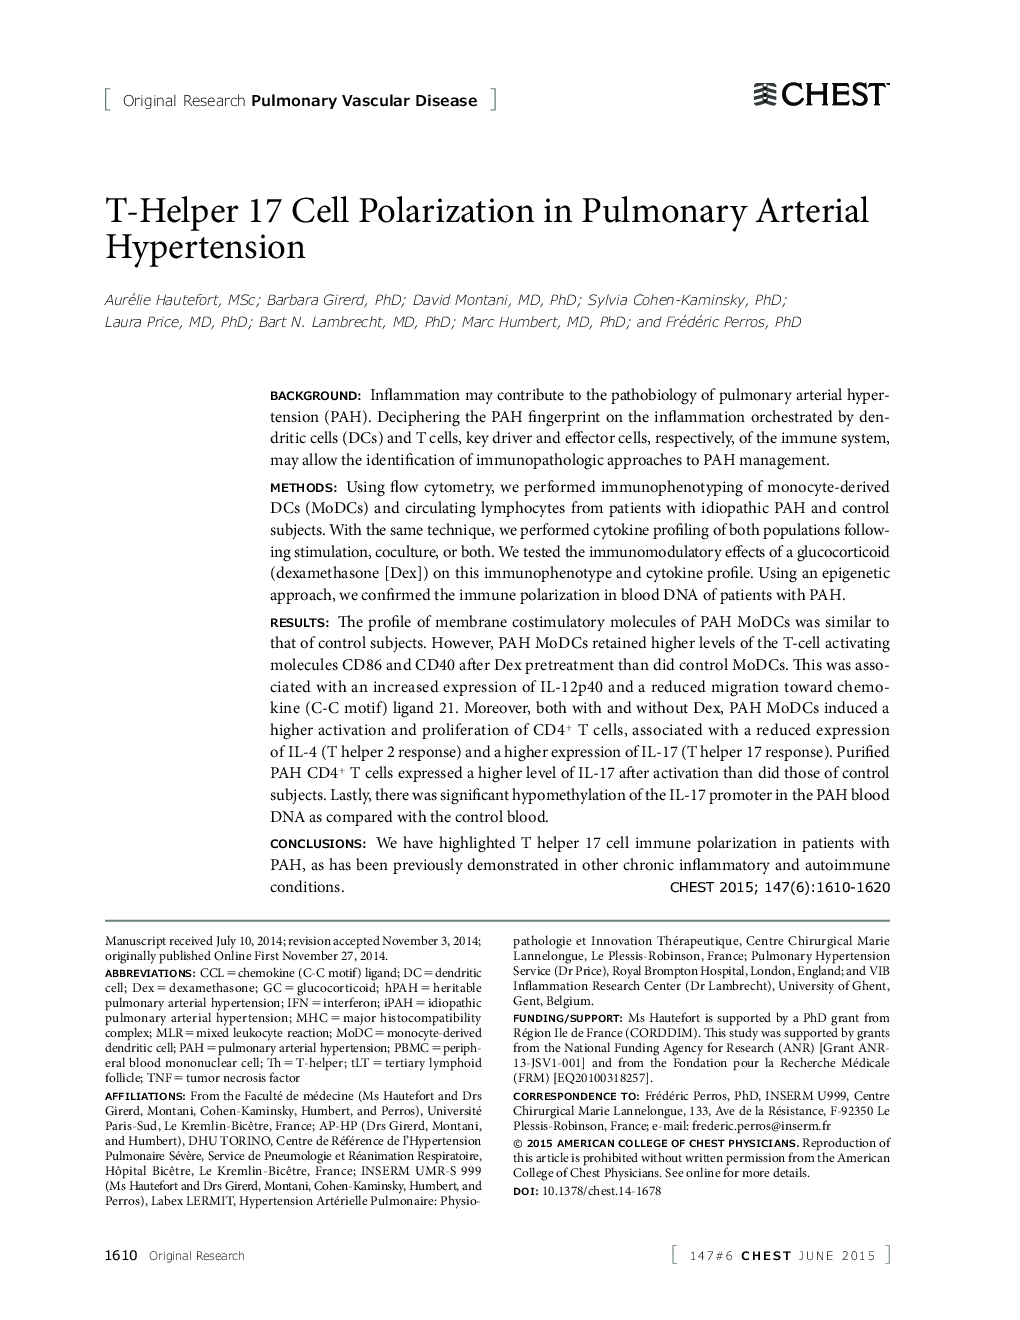 T-Helper 17 Cell Polarization in Pulmonary Arterial Hypertension 